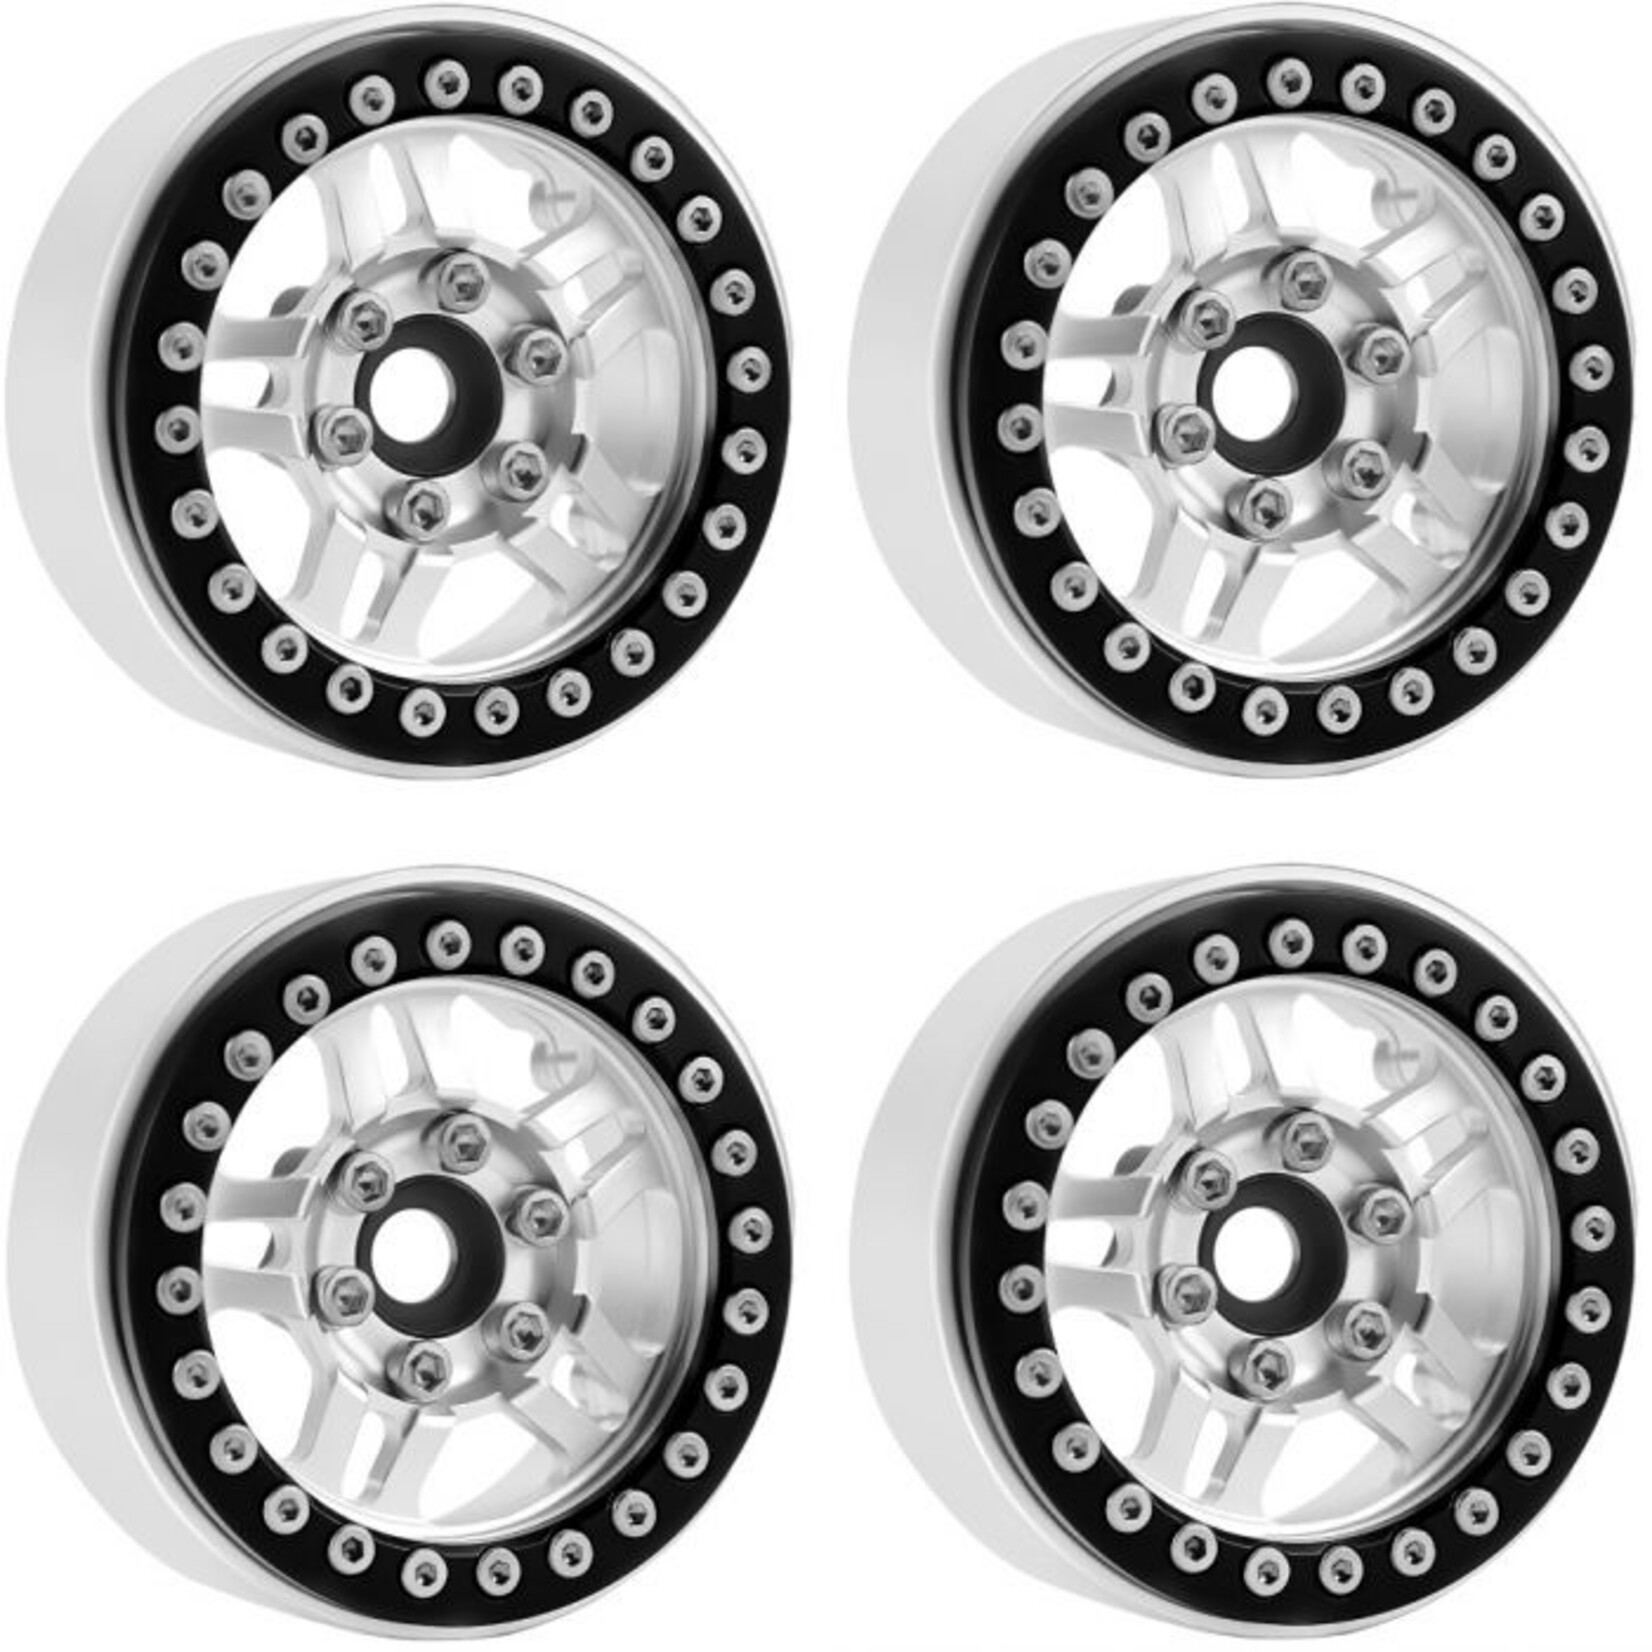 Power Hobby Power Hobby 1/10 Scale B4 Aluminum Beadlock Crawler Wheels (4) #PHB5053SILVER